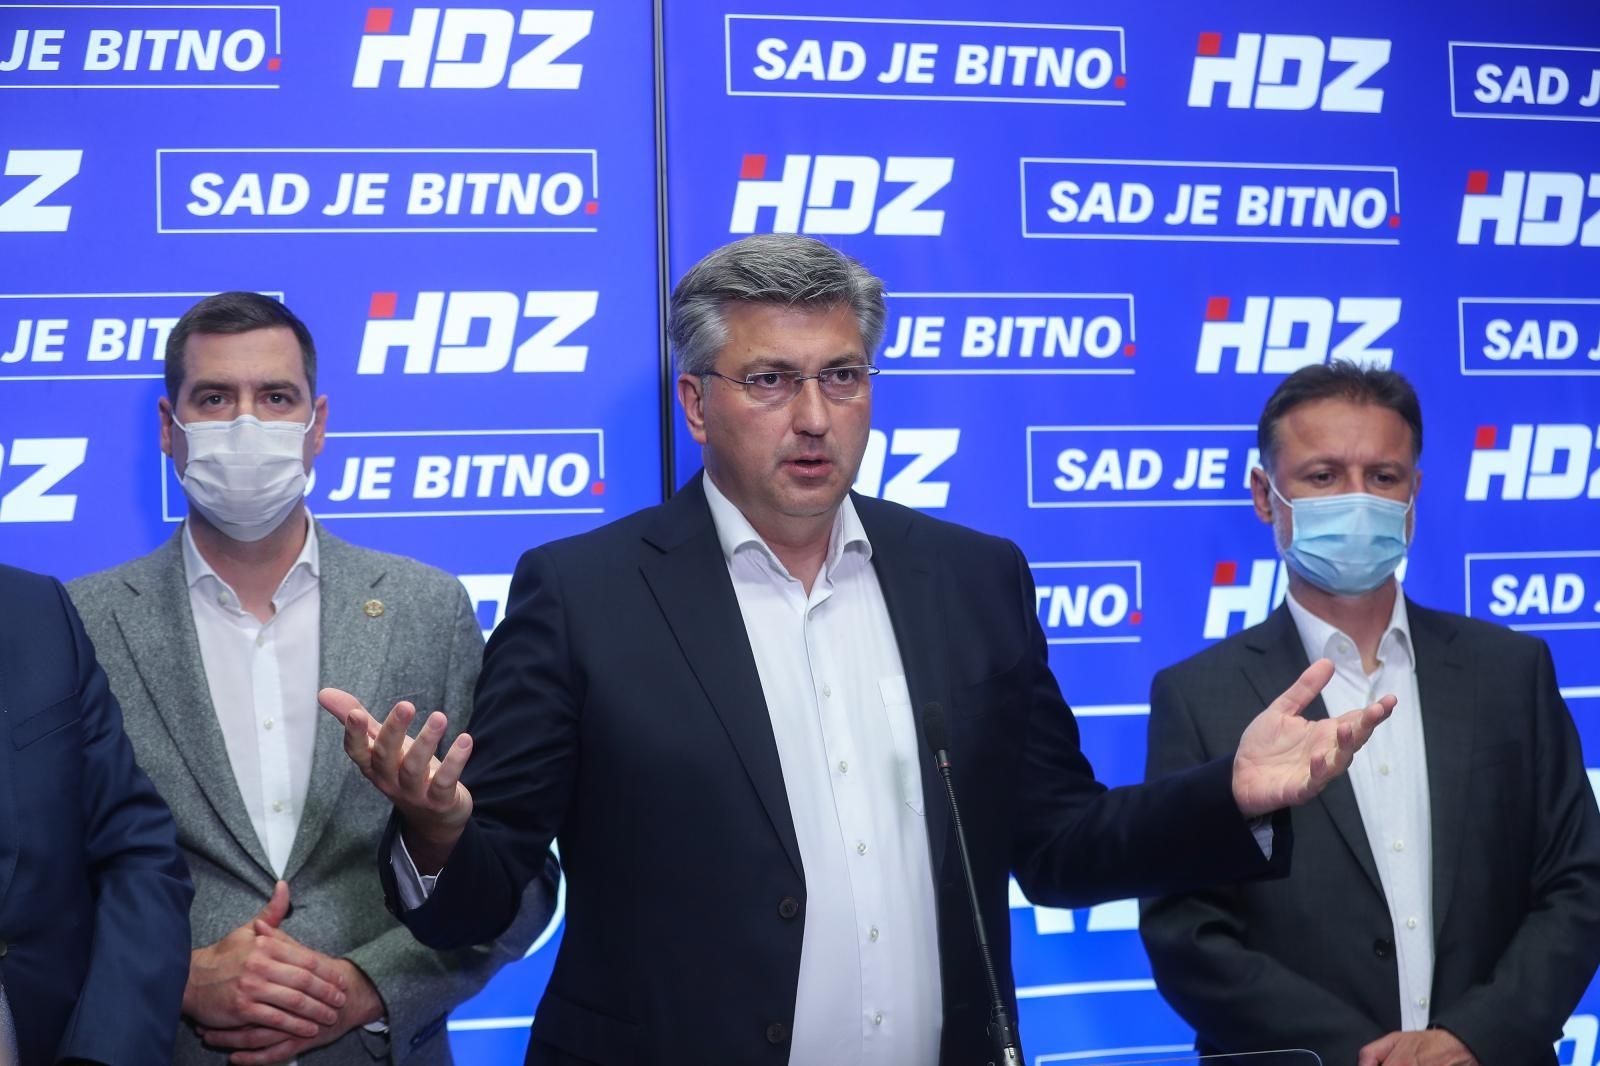 30.05.2021., Zagreb - Predsjednik  Vlade RH i HDZ-a Andrej Plenkovic  komentirao je rezultate lokalnih izbora. Photo: Zeljko Lukunic/PIXSELL